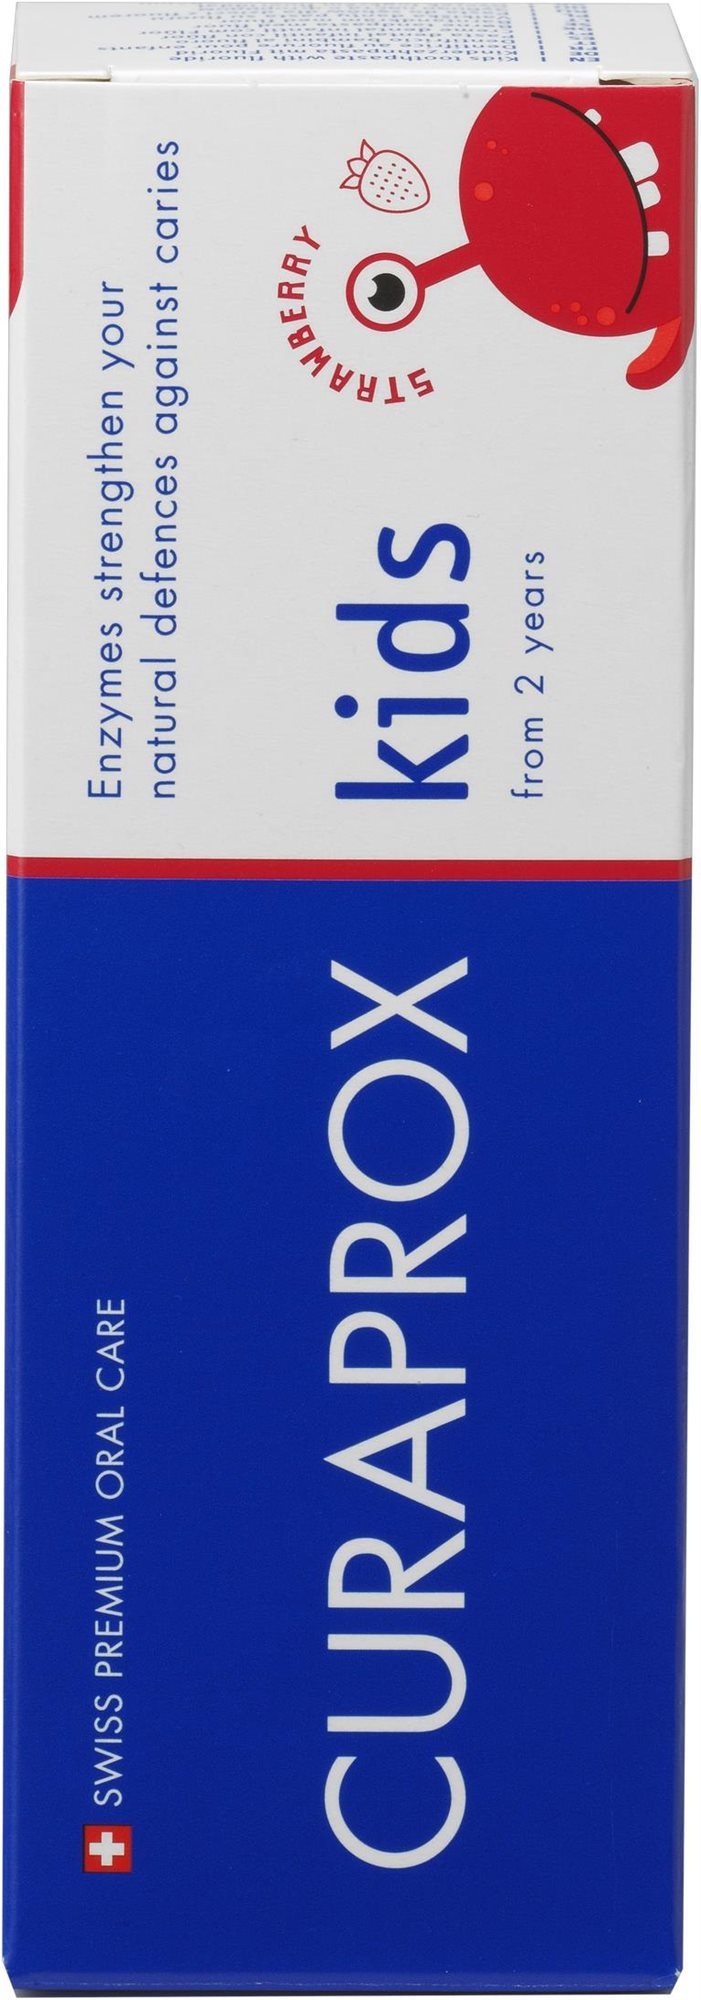 Fogkrém CURAPROX KIDS Epres fogkrém 60 ml